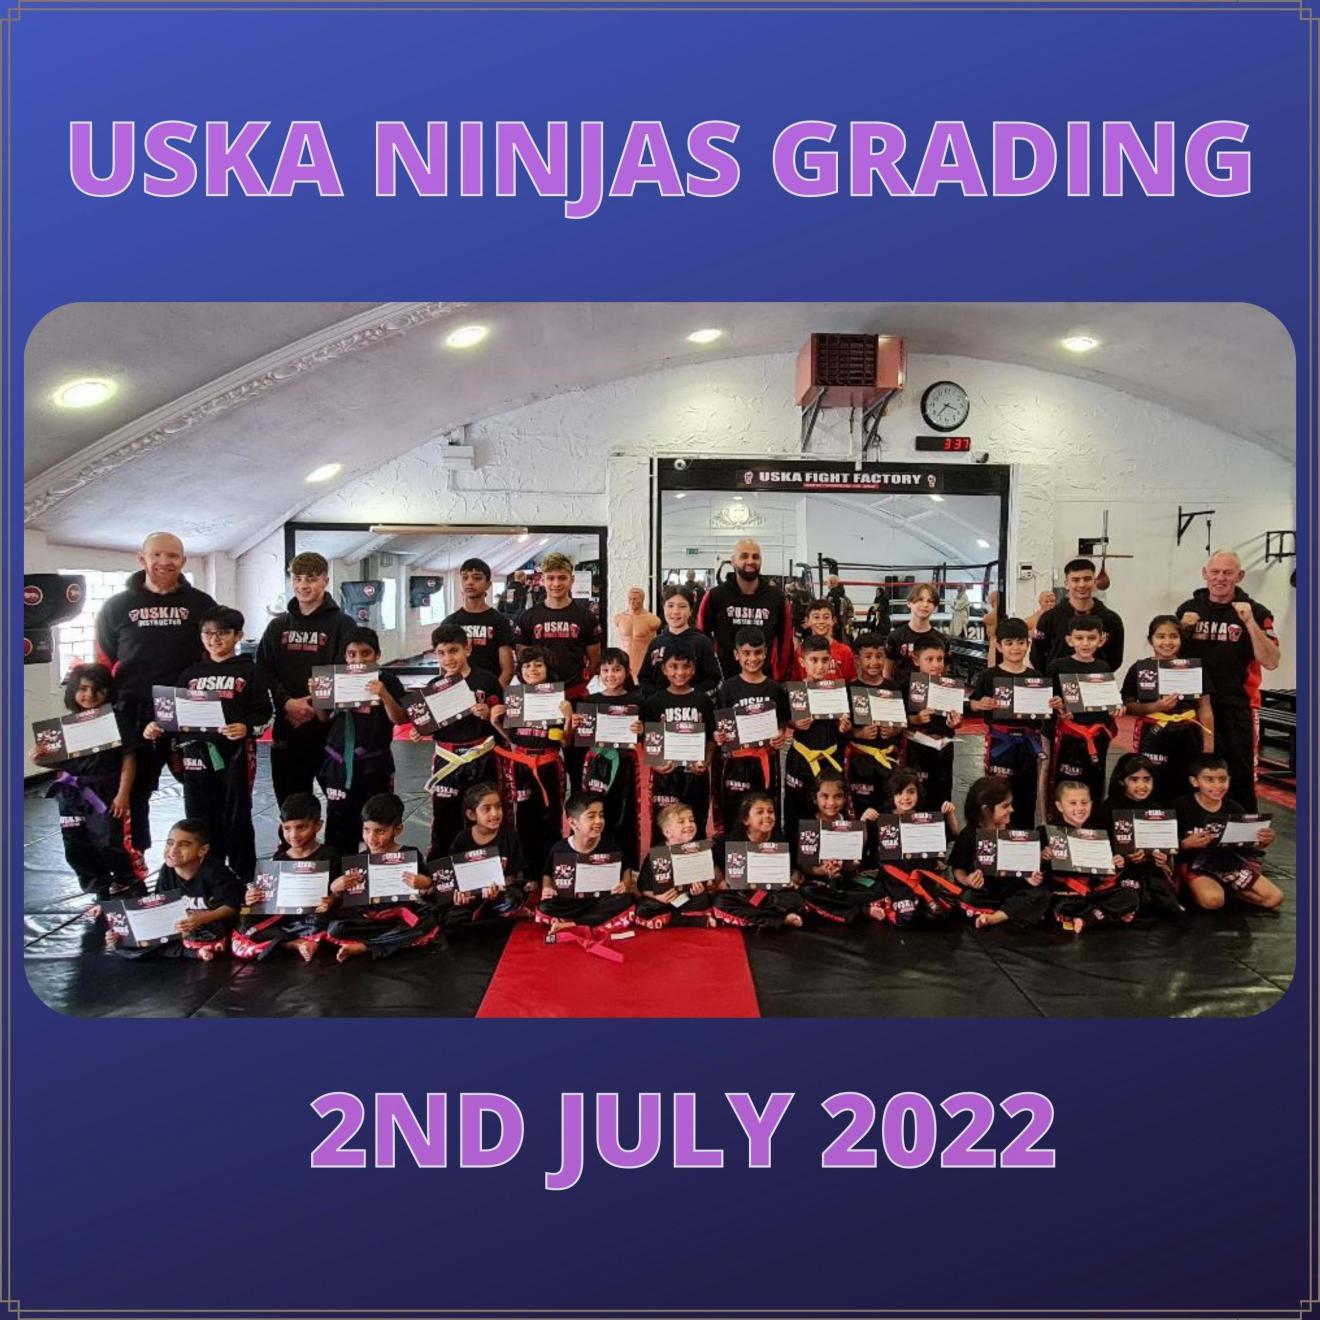 02-07-22 - 27 Ninja's earn their new belts on latest USKA Ninja's Grading